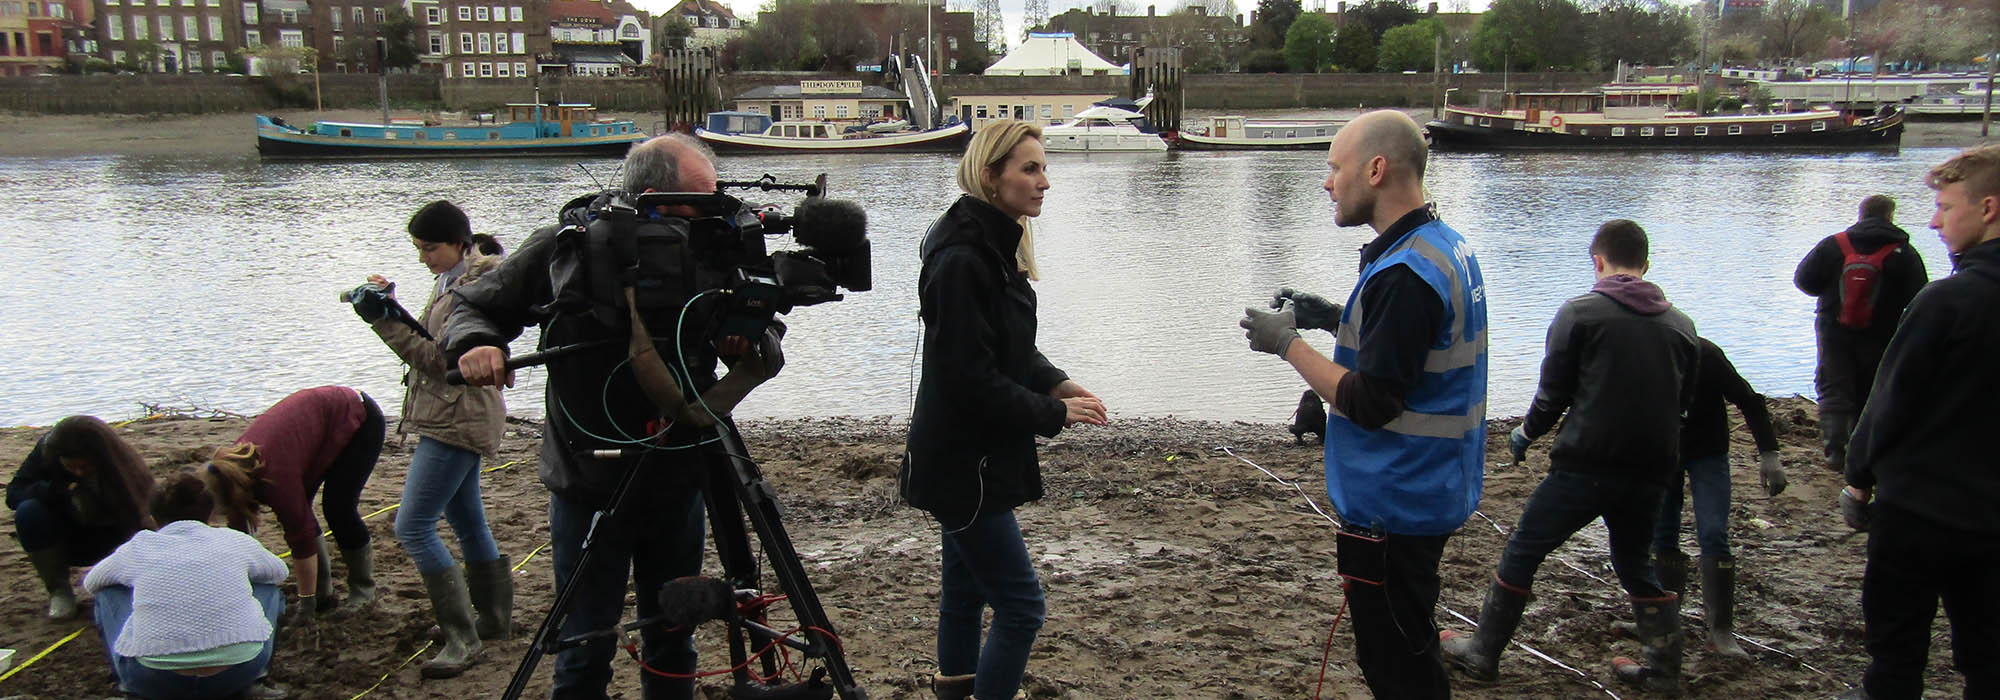 Thames21 calls for re-think of current London flood risk management proposals